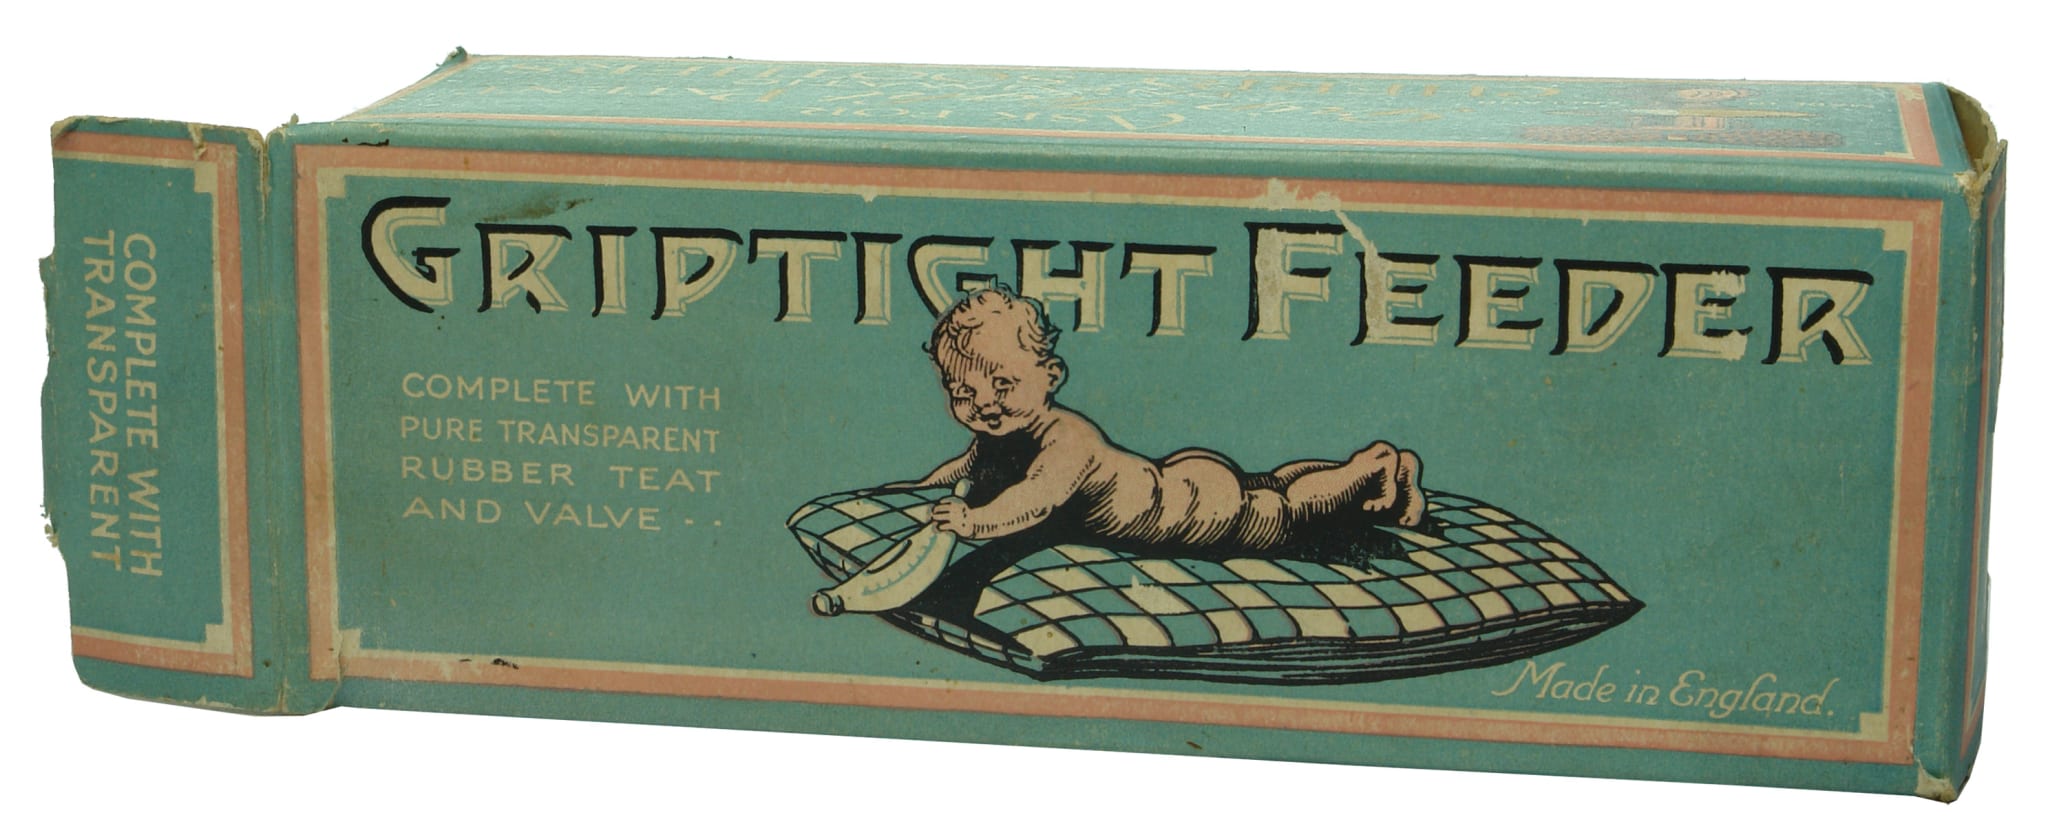 Griptight Baby Feeder Bottle and Box